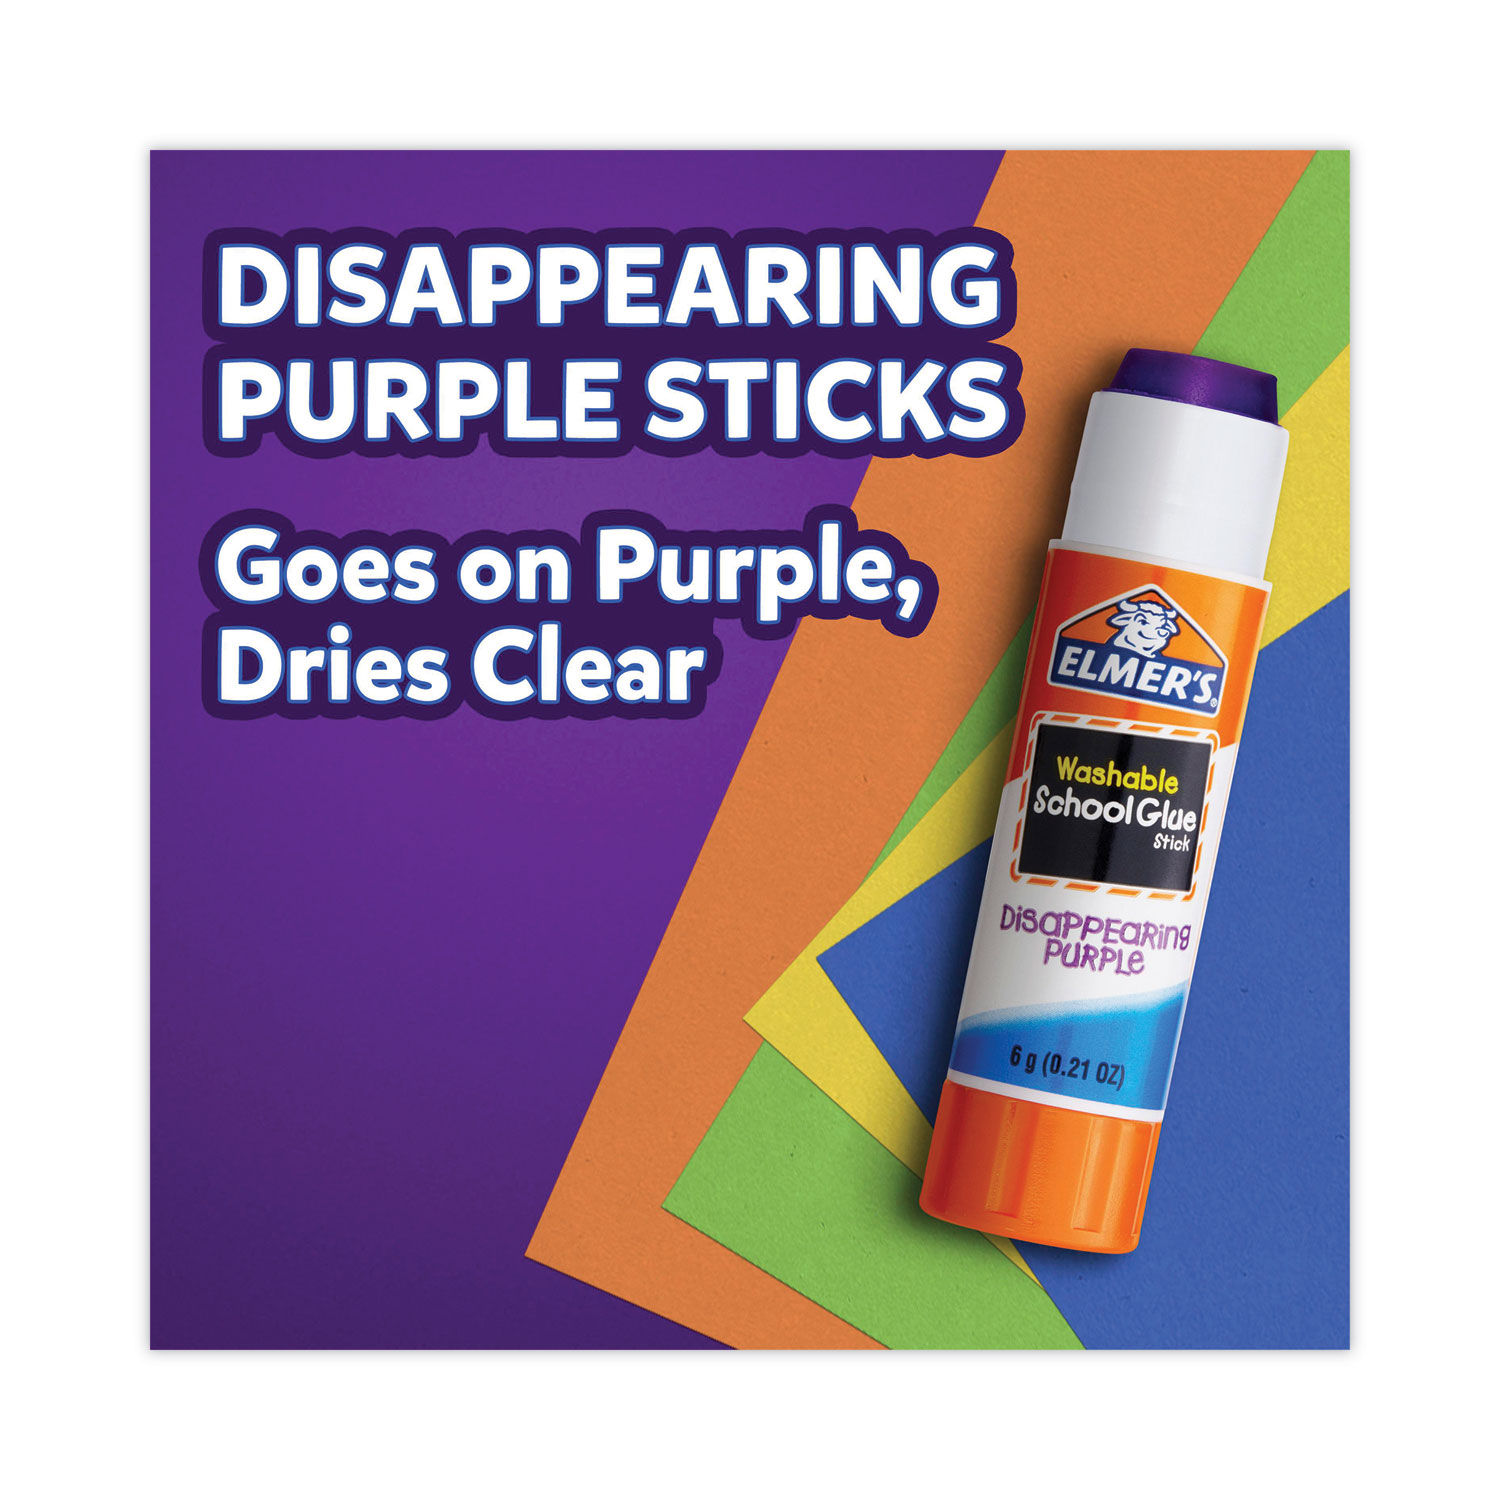 Elmers Washable Disappearing Purple School Glue Stick 1 Ea, Adhesives